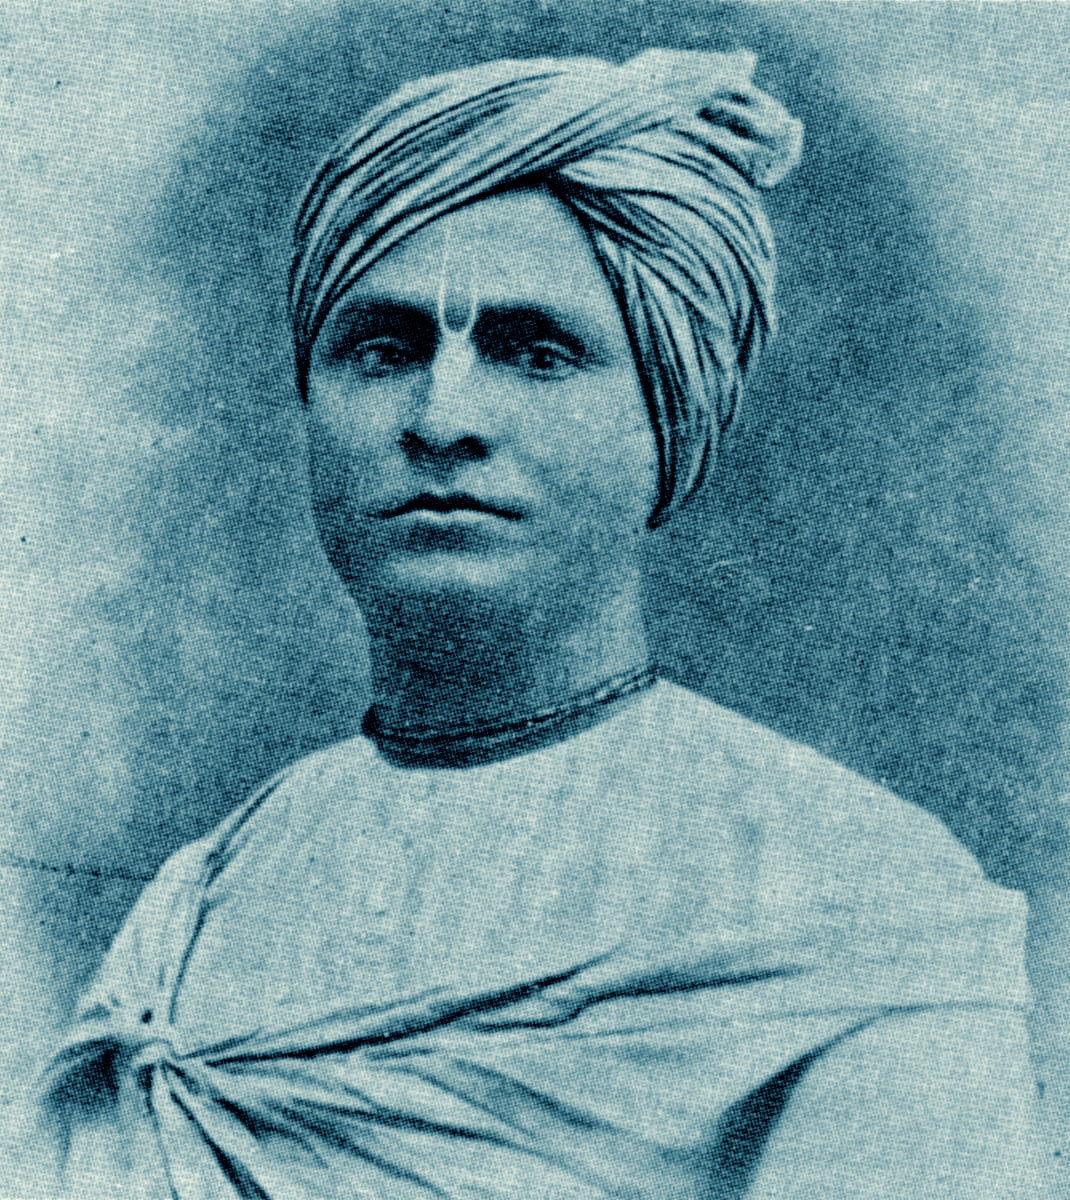 Yougn Sridhar Swami